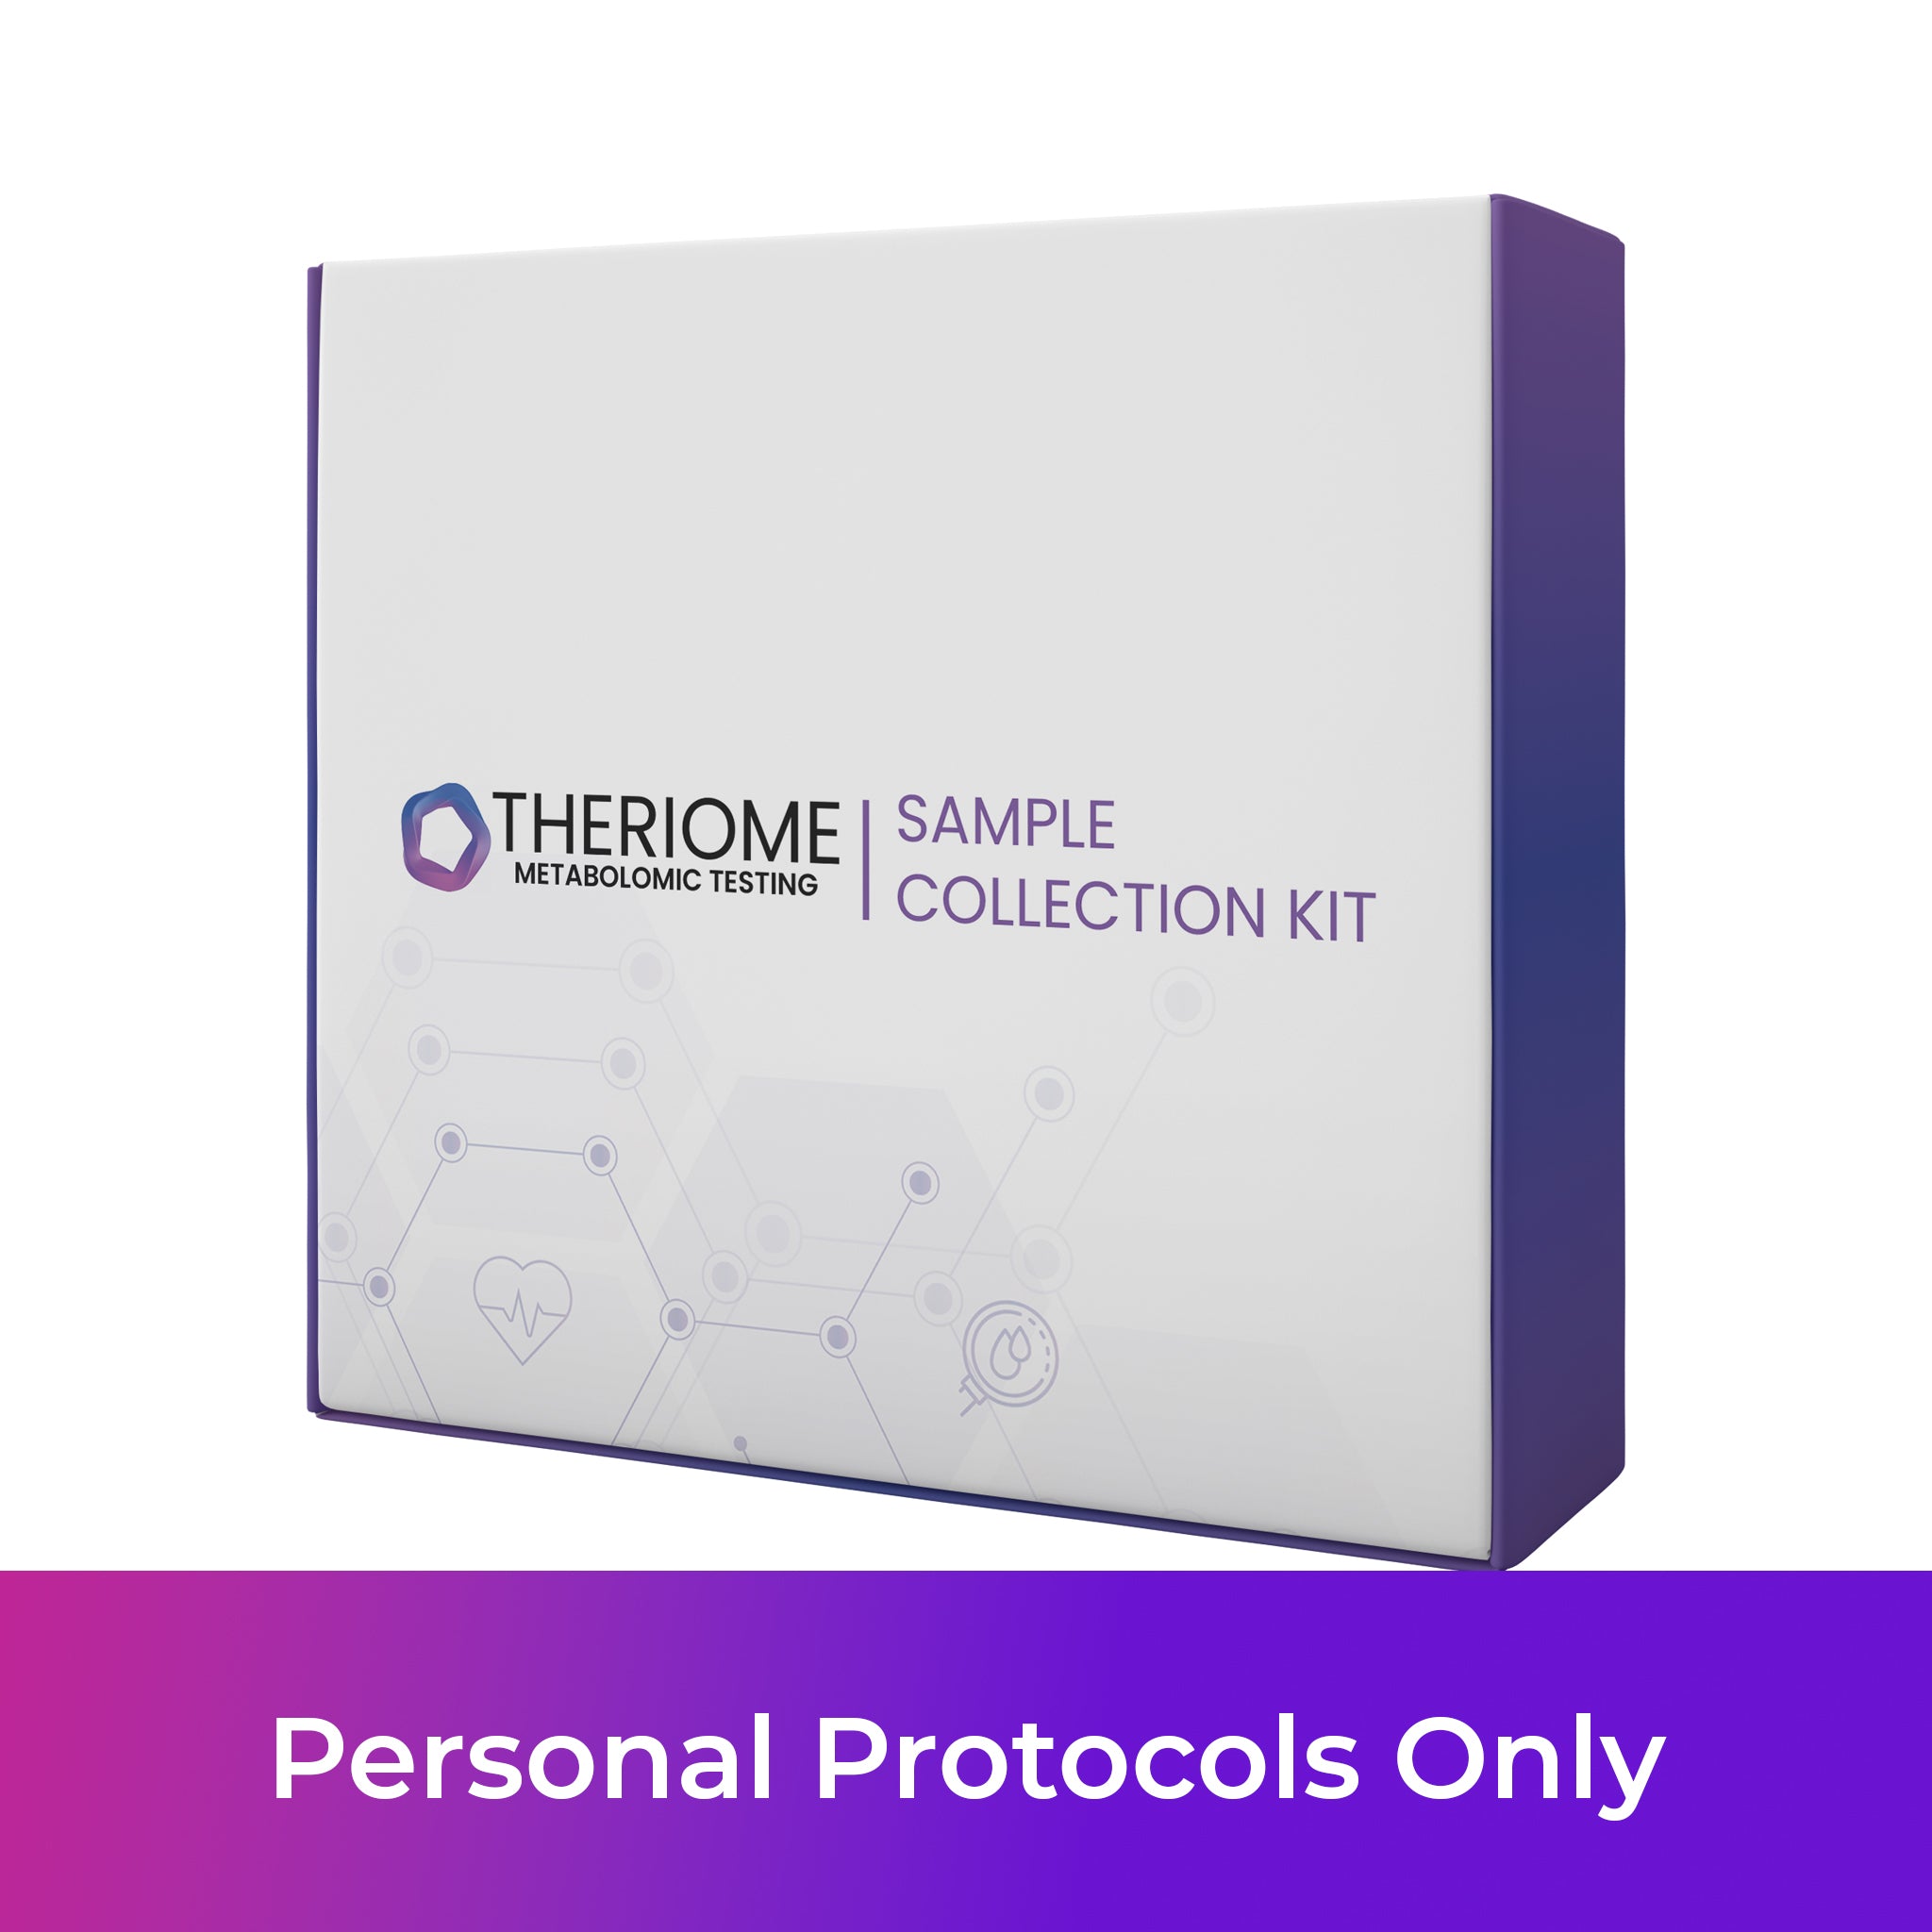 Personalized Protocols